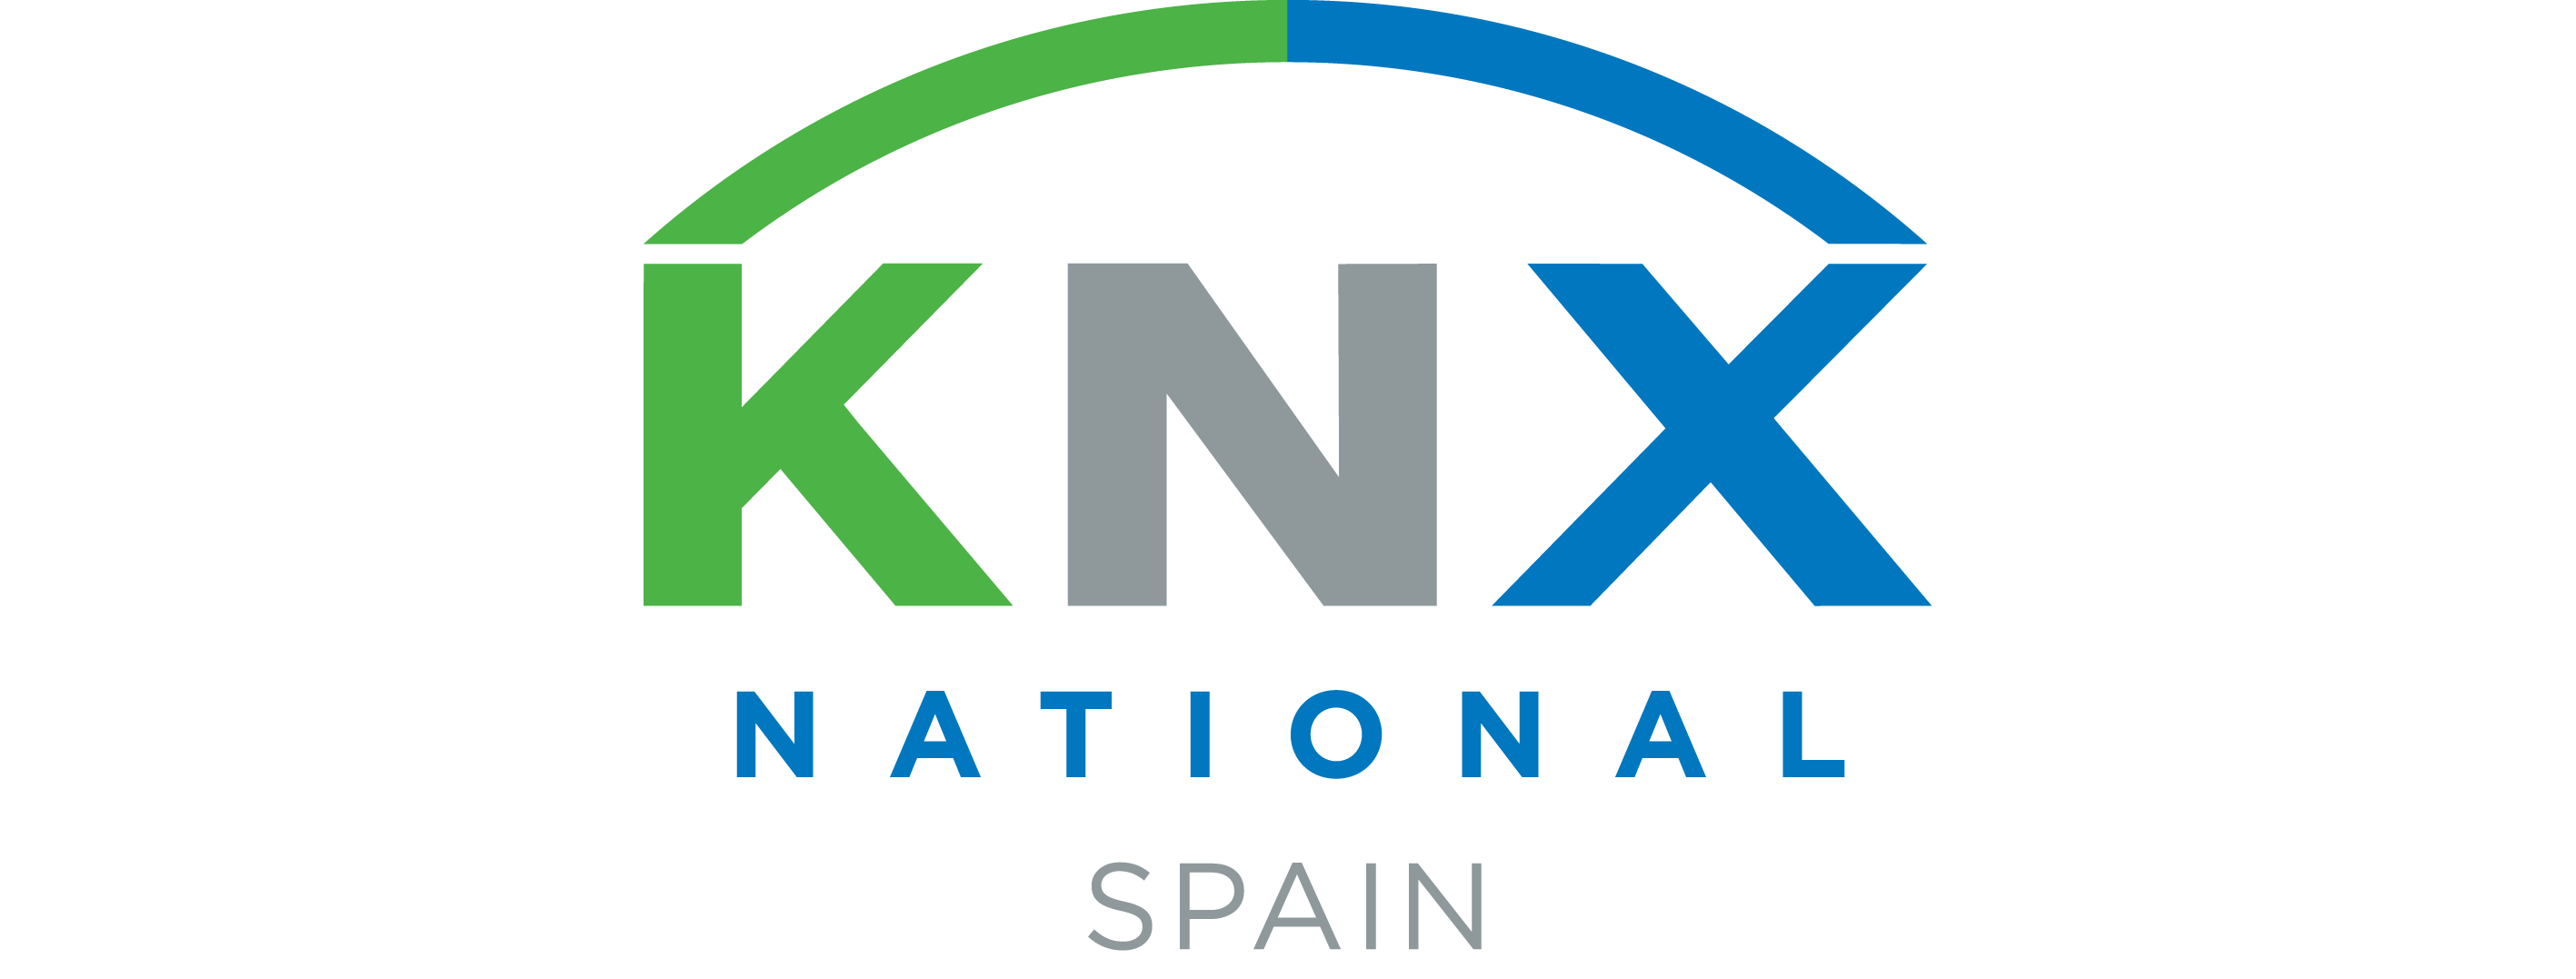 KNX NATIONAL SPAIN